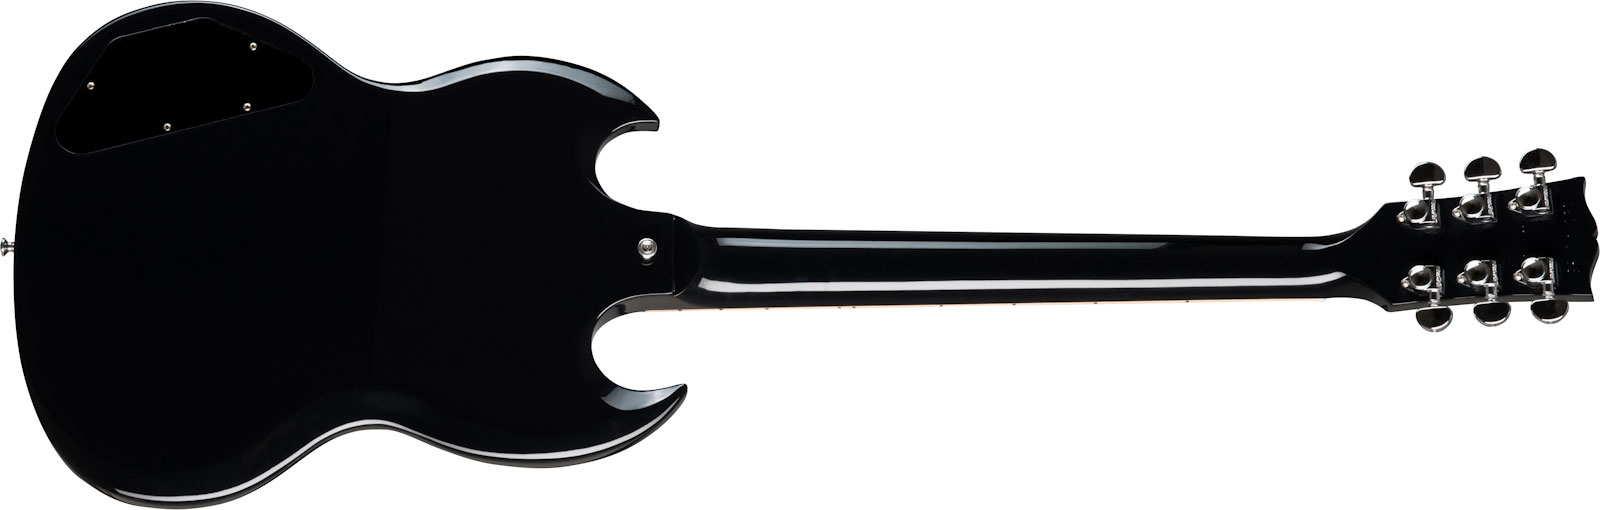 Gibson SG Standard Left Hand - ebony Solid body electric guitar black